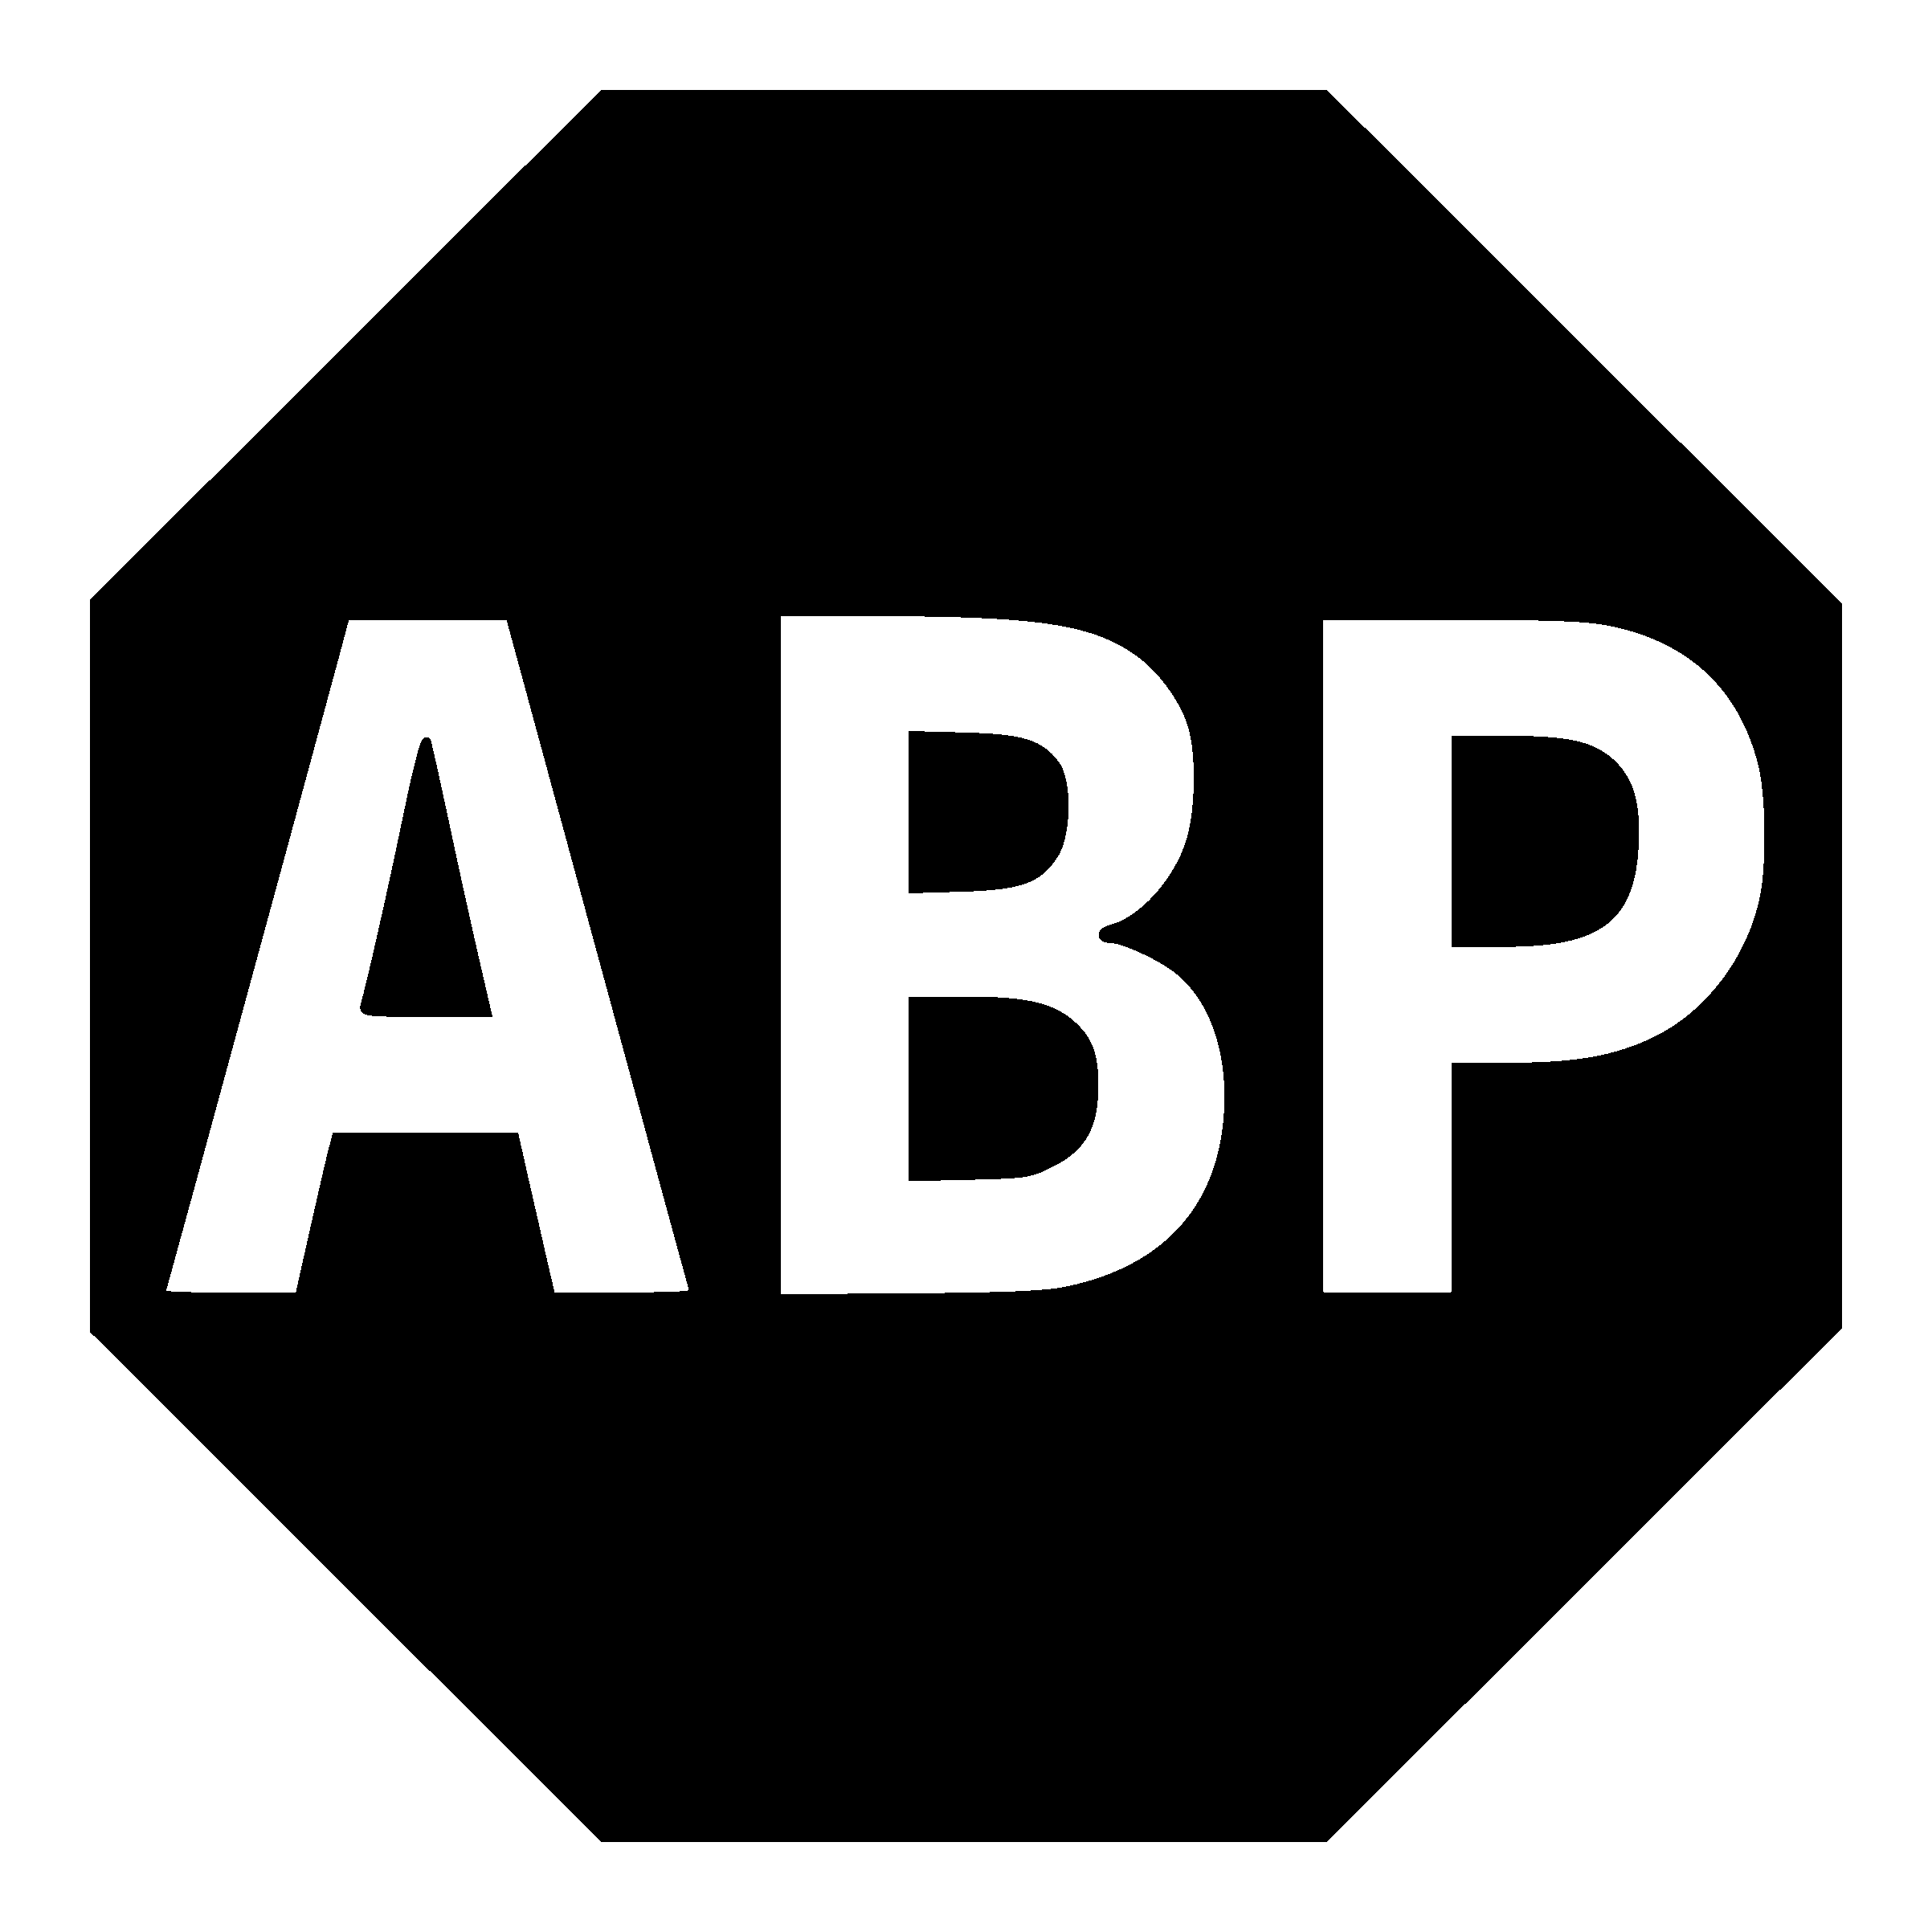 Adblock Logo - AdBlock Logo PNG Transparent & SVG Vector - Freebie Supply